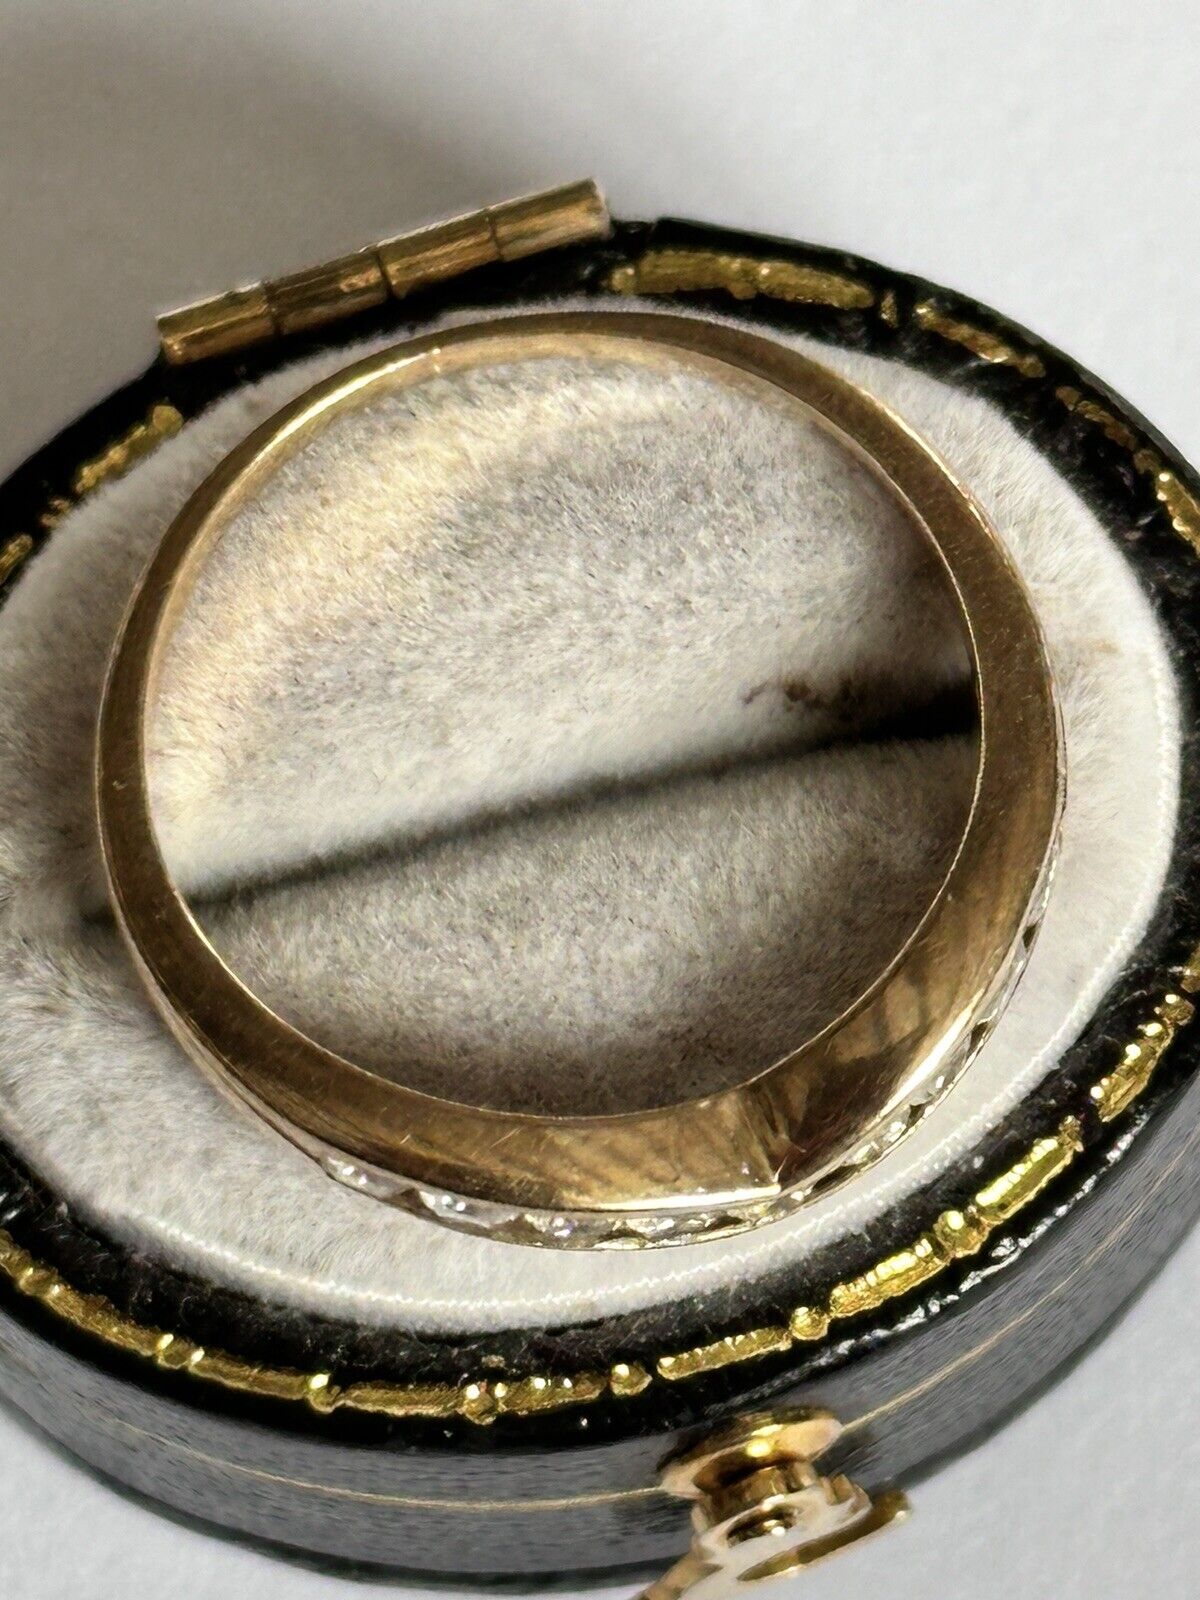 Vintage 9ct Gold 0.33ct Diamond Channel Set Wishbone Ring